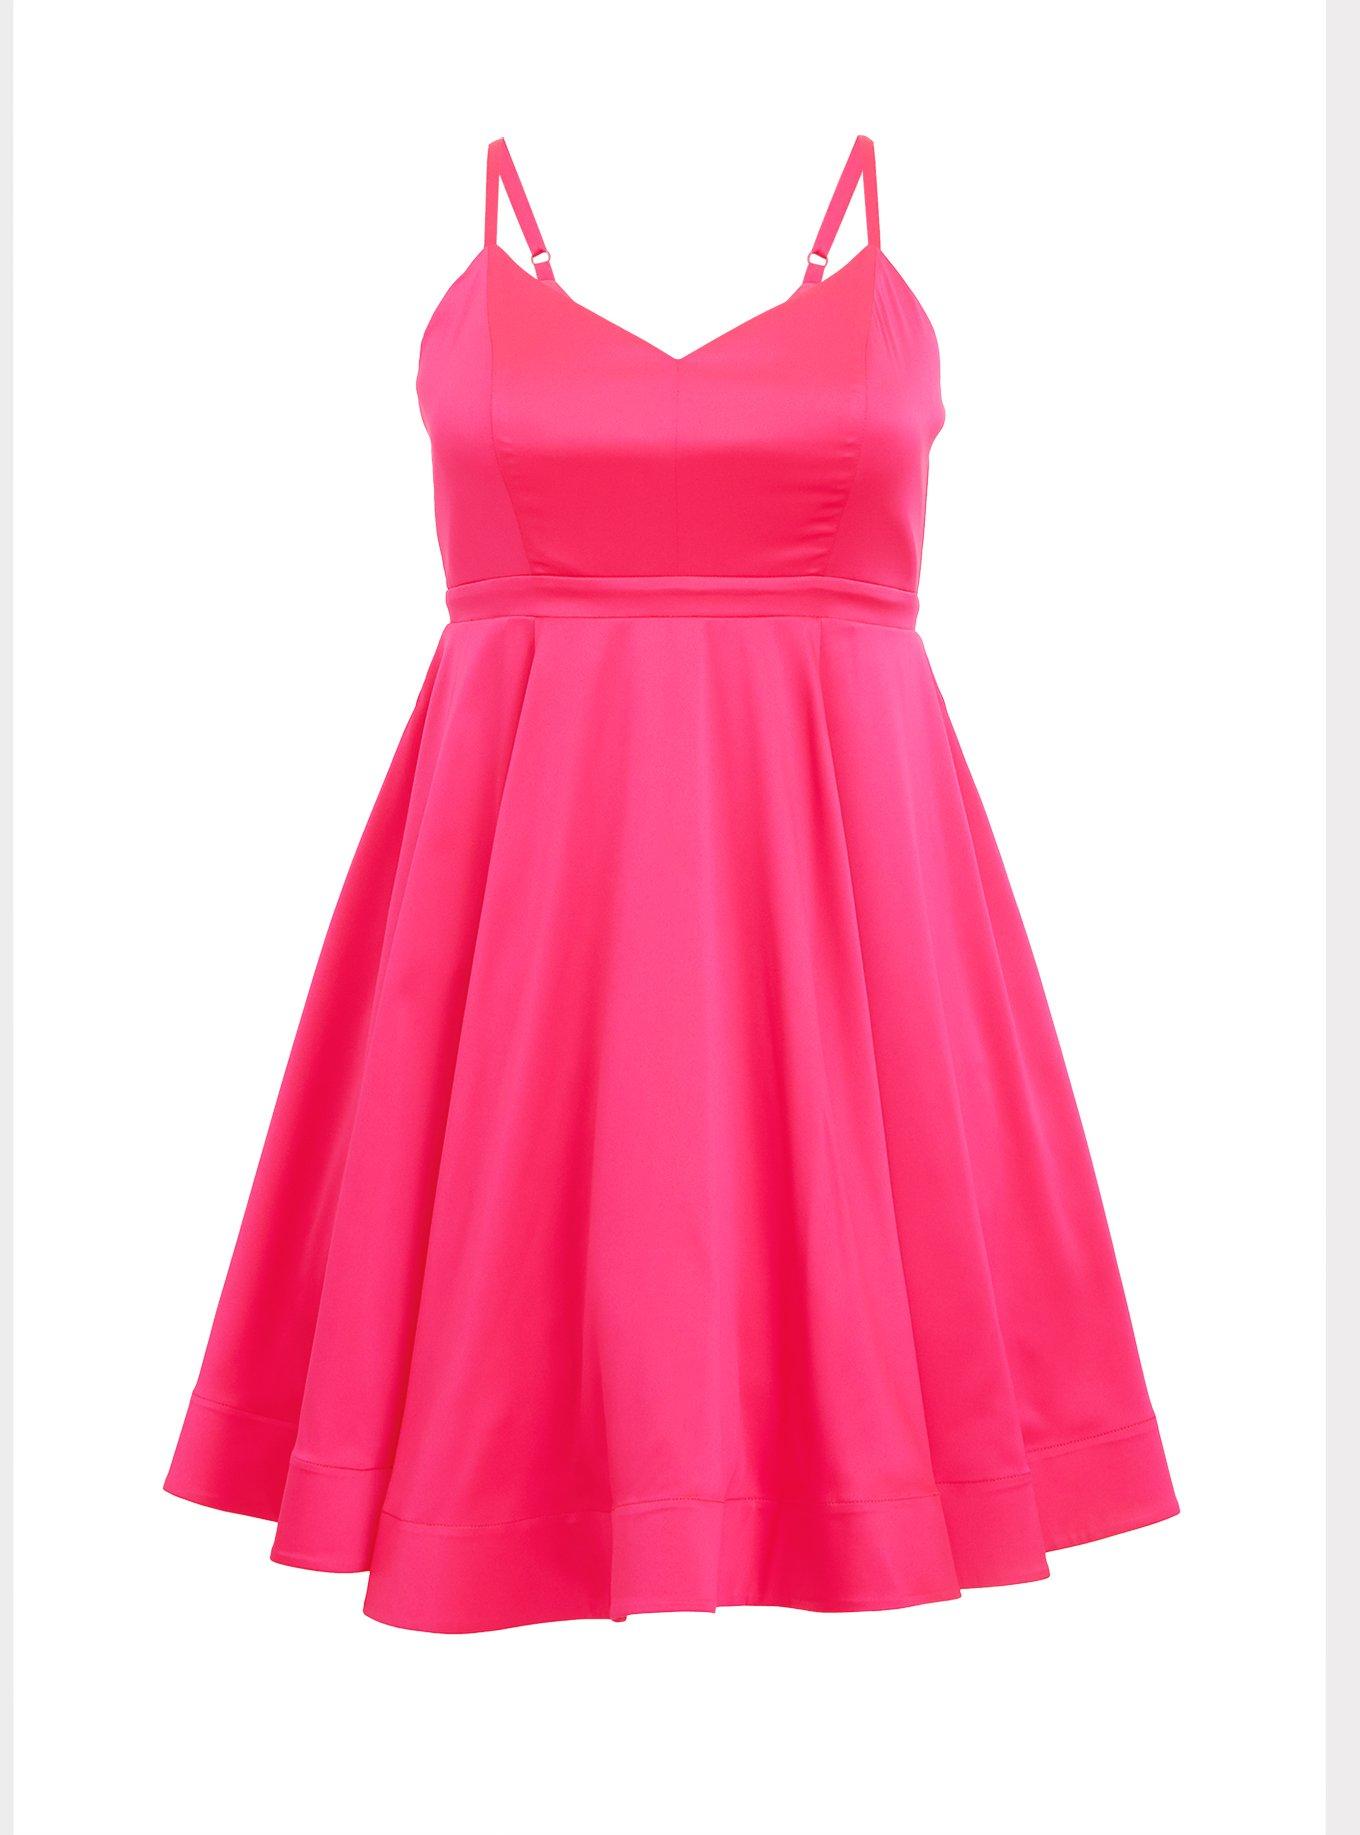 Torrid Woman's Plus Size 3X Button Front Midi Clip Heart Chiffon Hot Pink  Dress